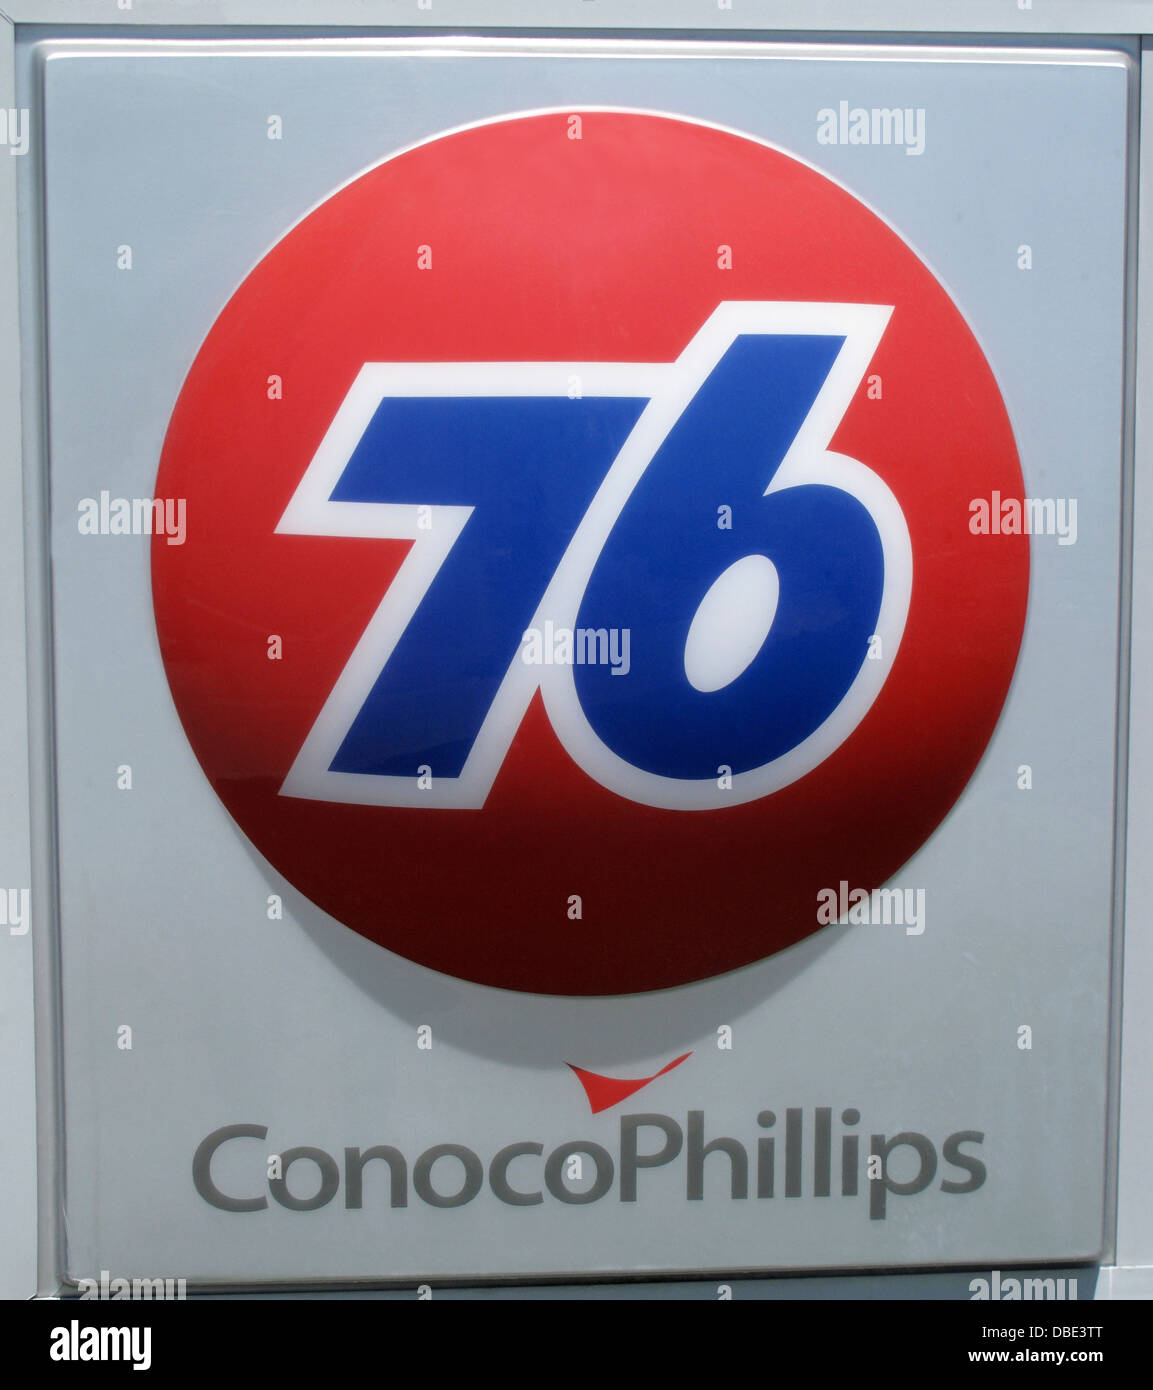 ConocoPhillips 76 gas station sign in San Jose, California Stock Photo